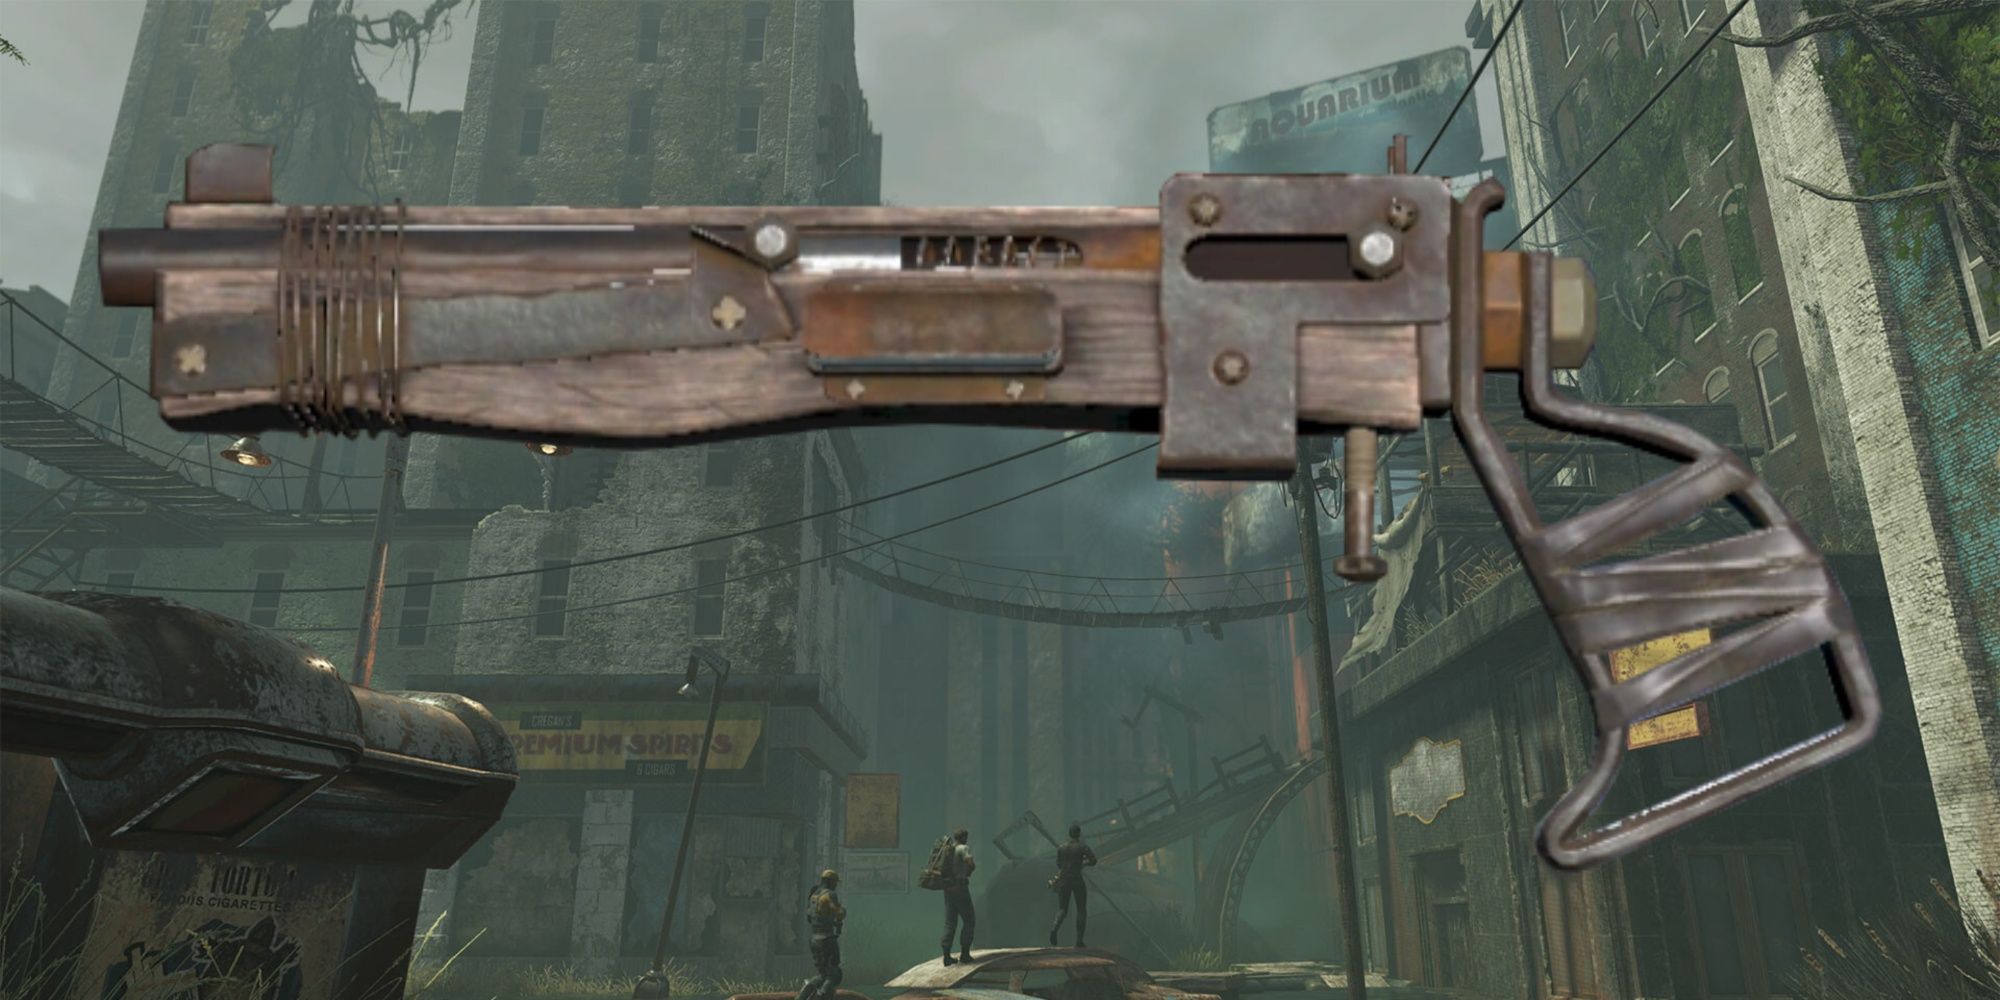 Pipe Pistol In Fallout 76